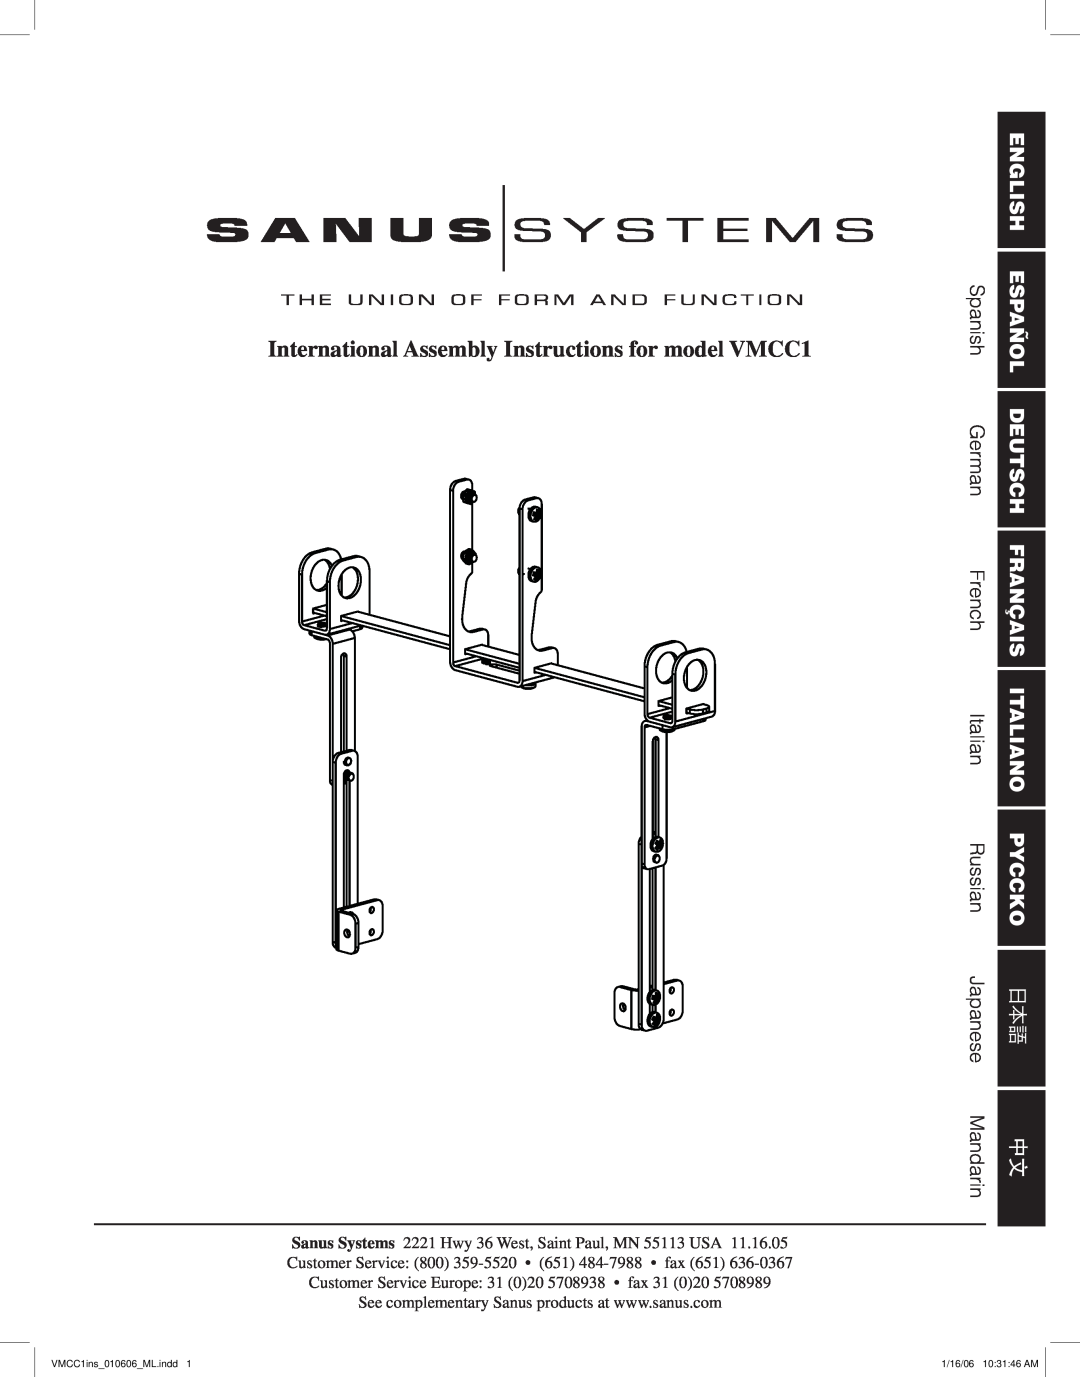 Sanus Systems VMCC1 manual English, Español, Deutsch, Français, Italiano, Pyccko, Spanish, German, French, Russian 